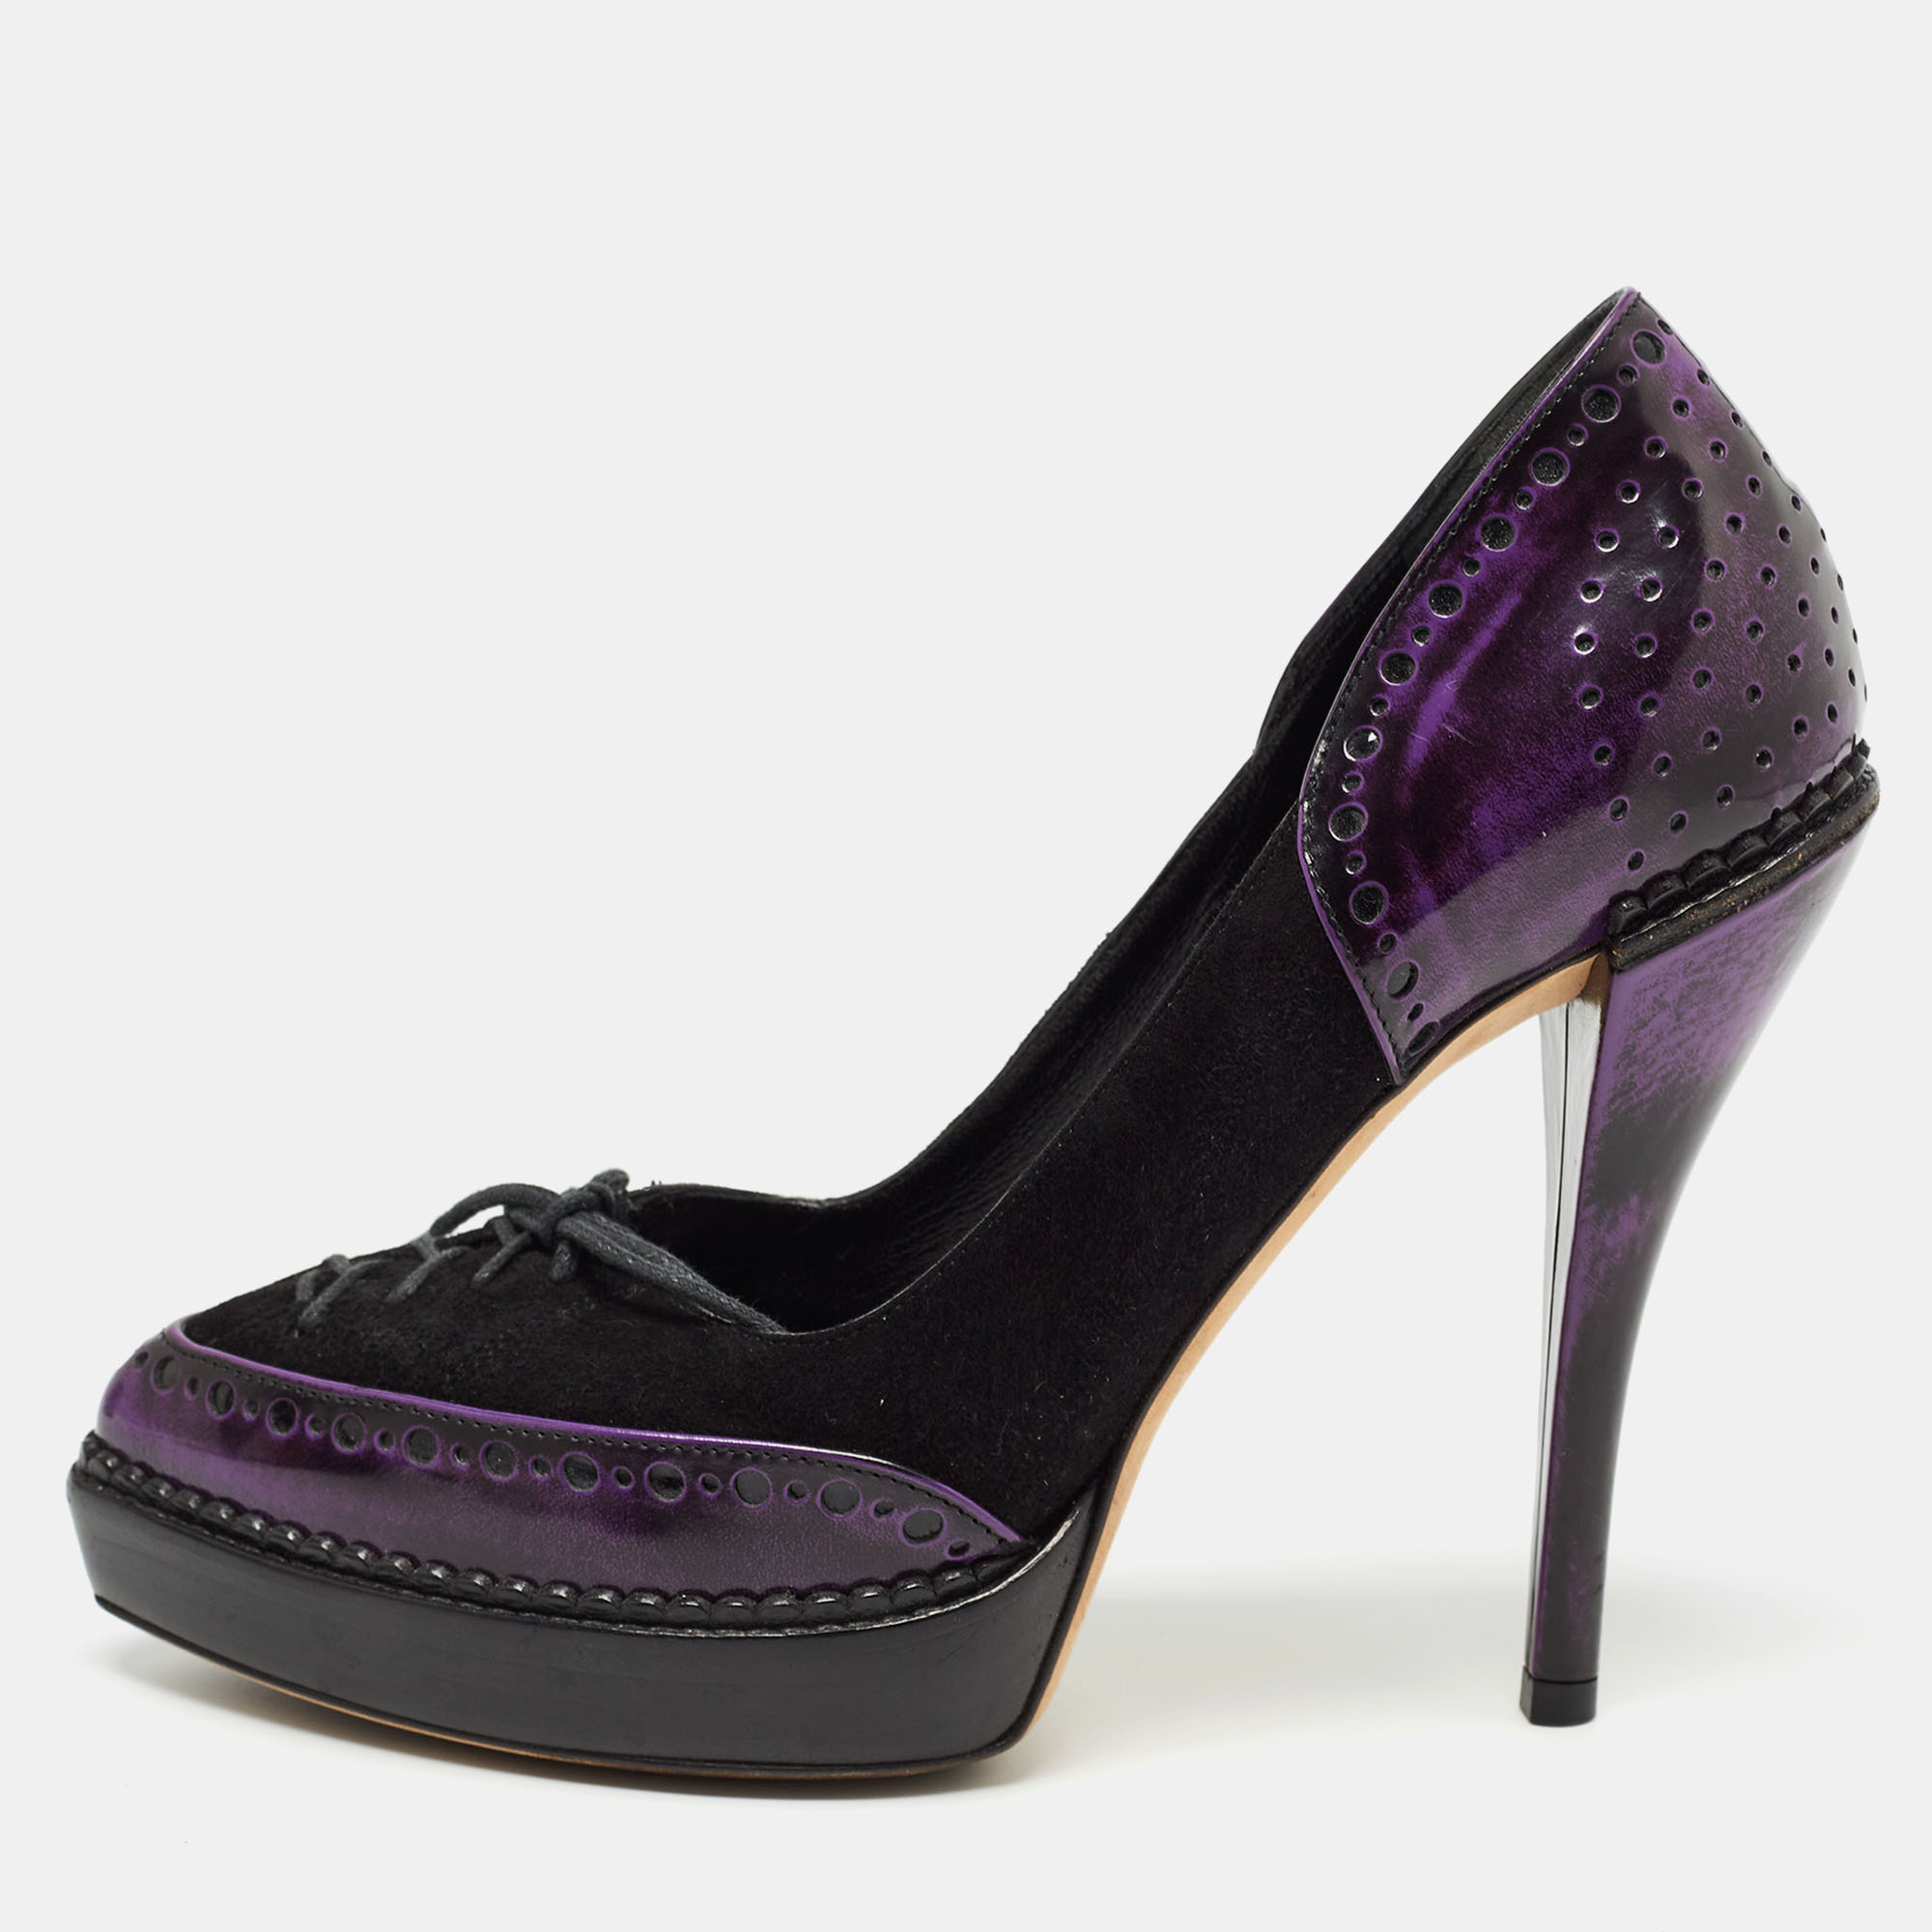 Gucci black/purple suede and patent leather lace up platform pumps size 36.5